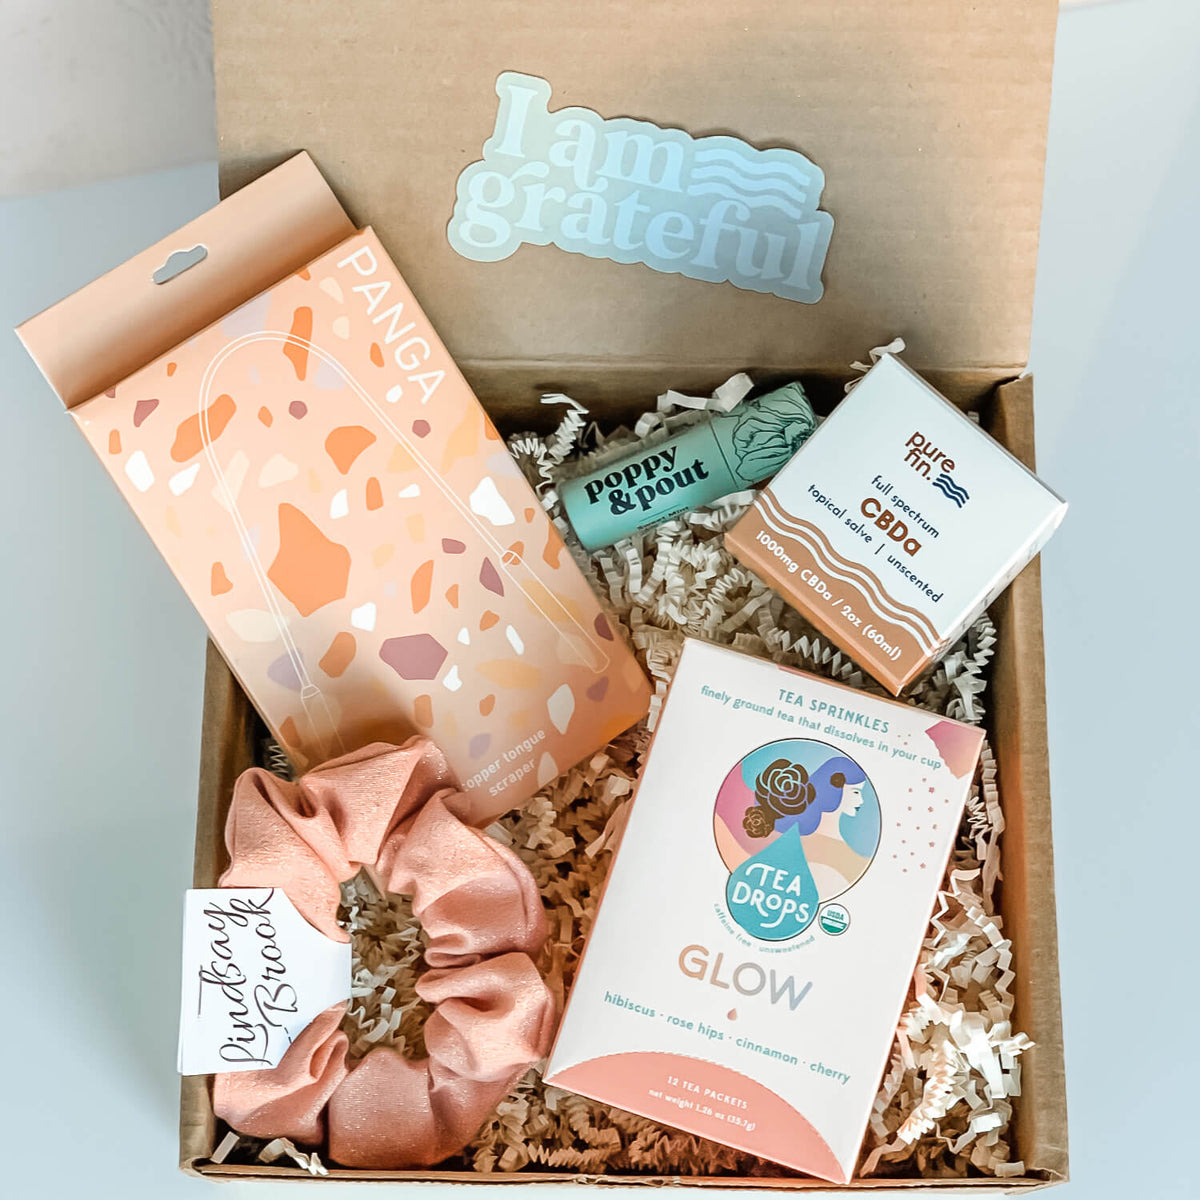 The Holistic Wellness Gift Box